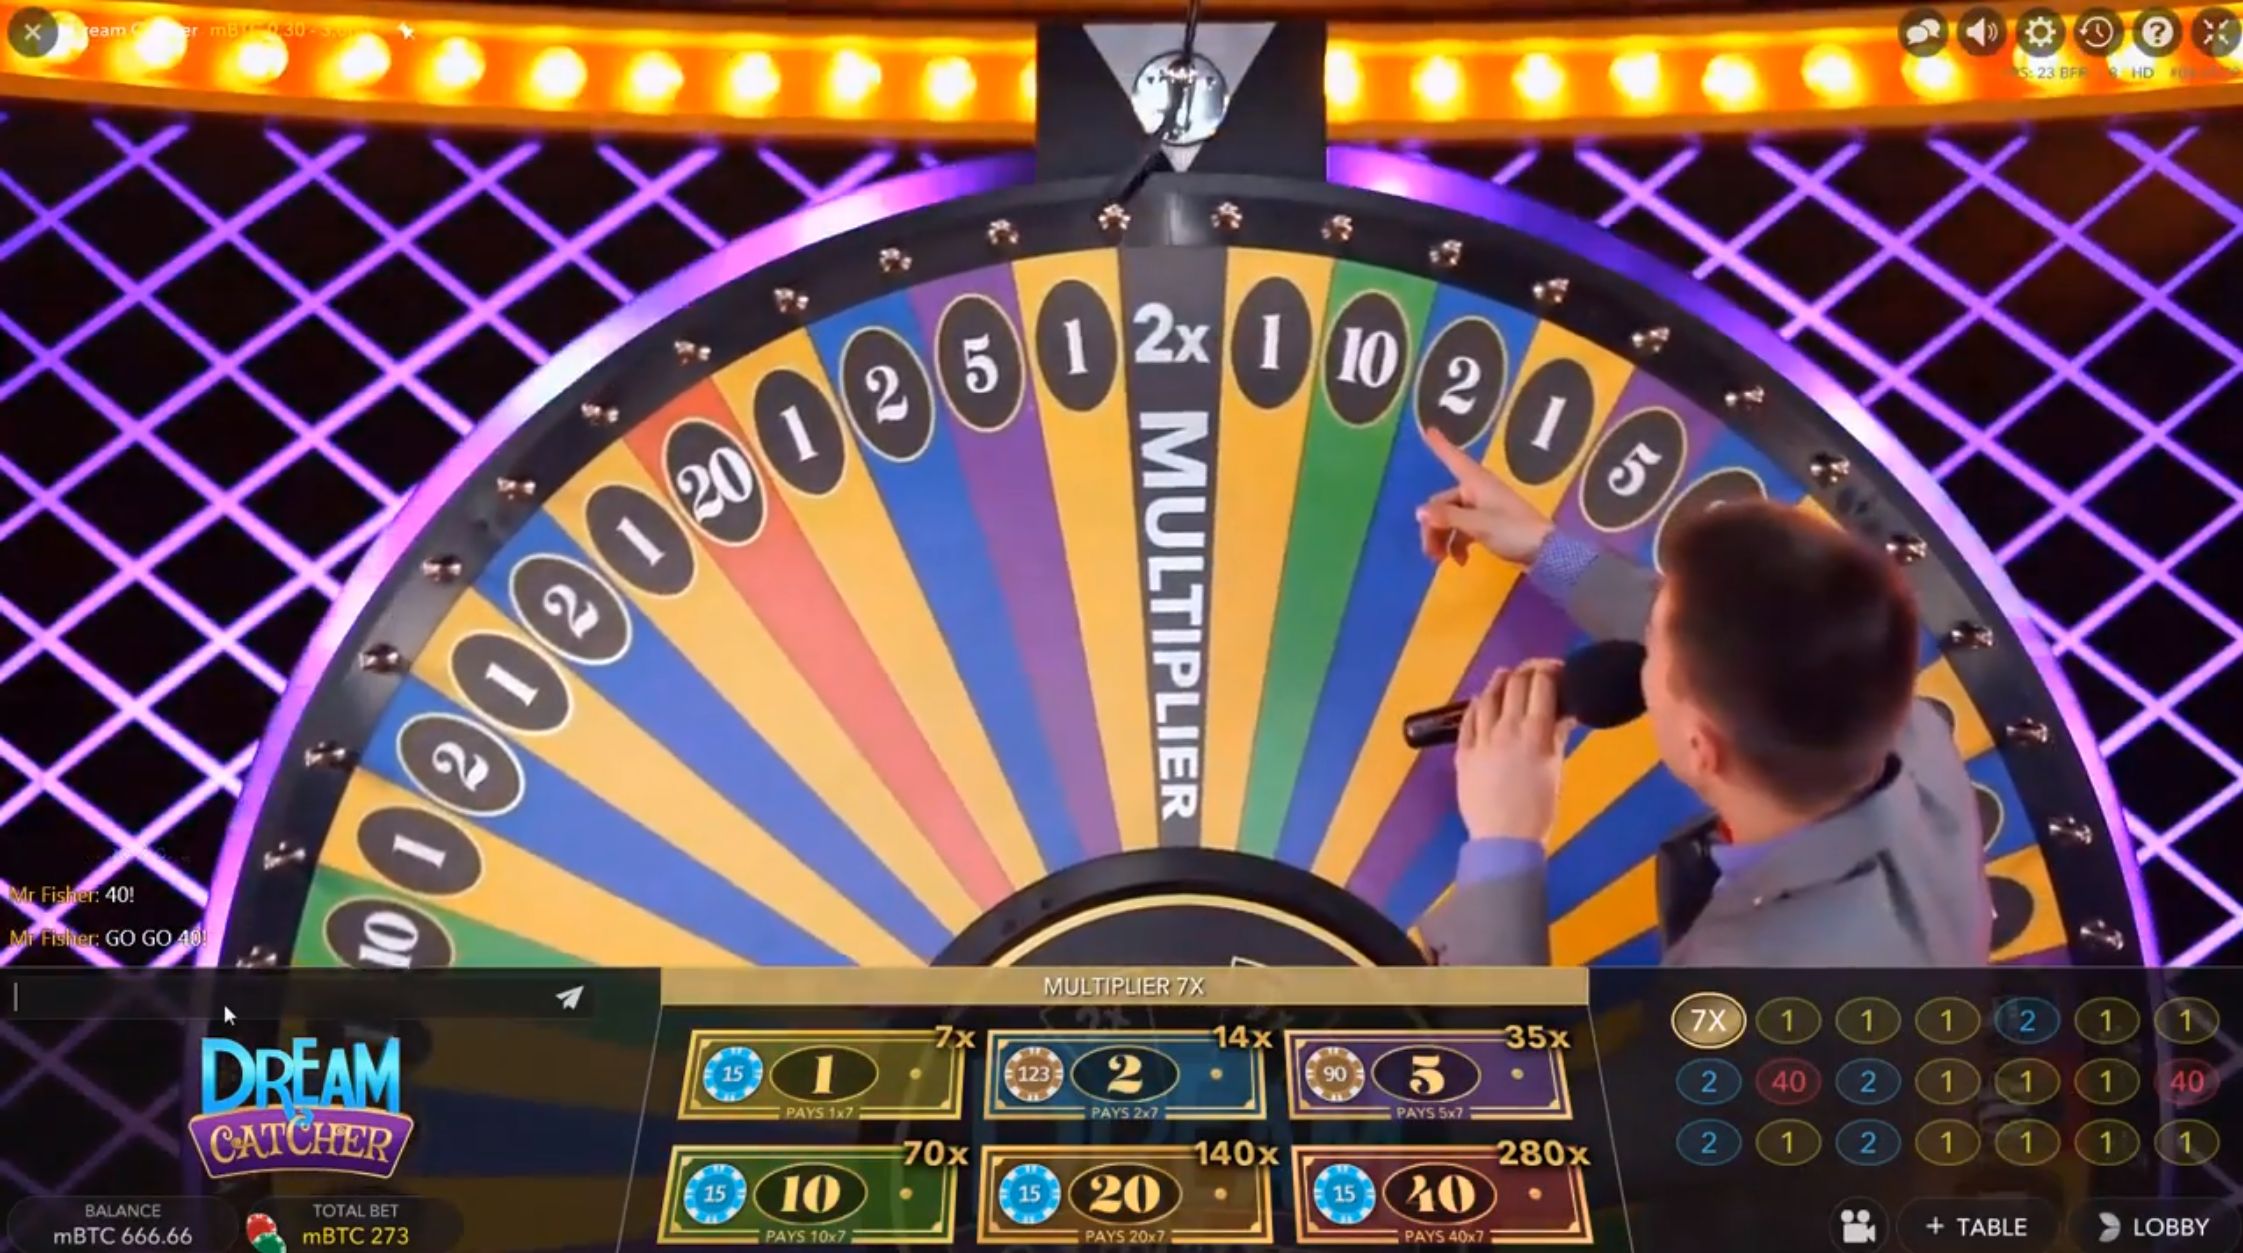 the big wheel casino game